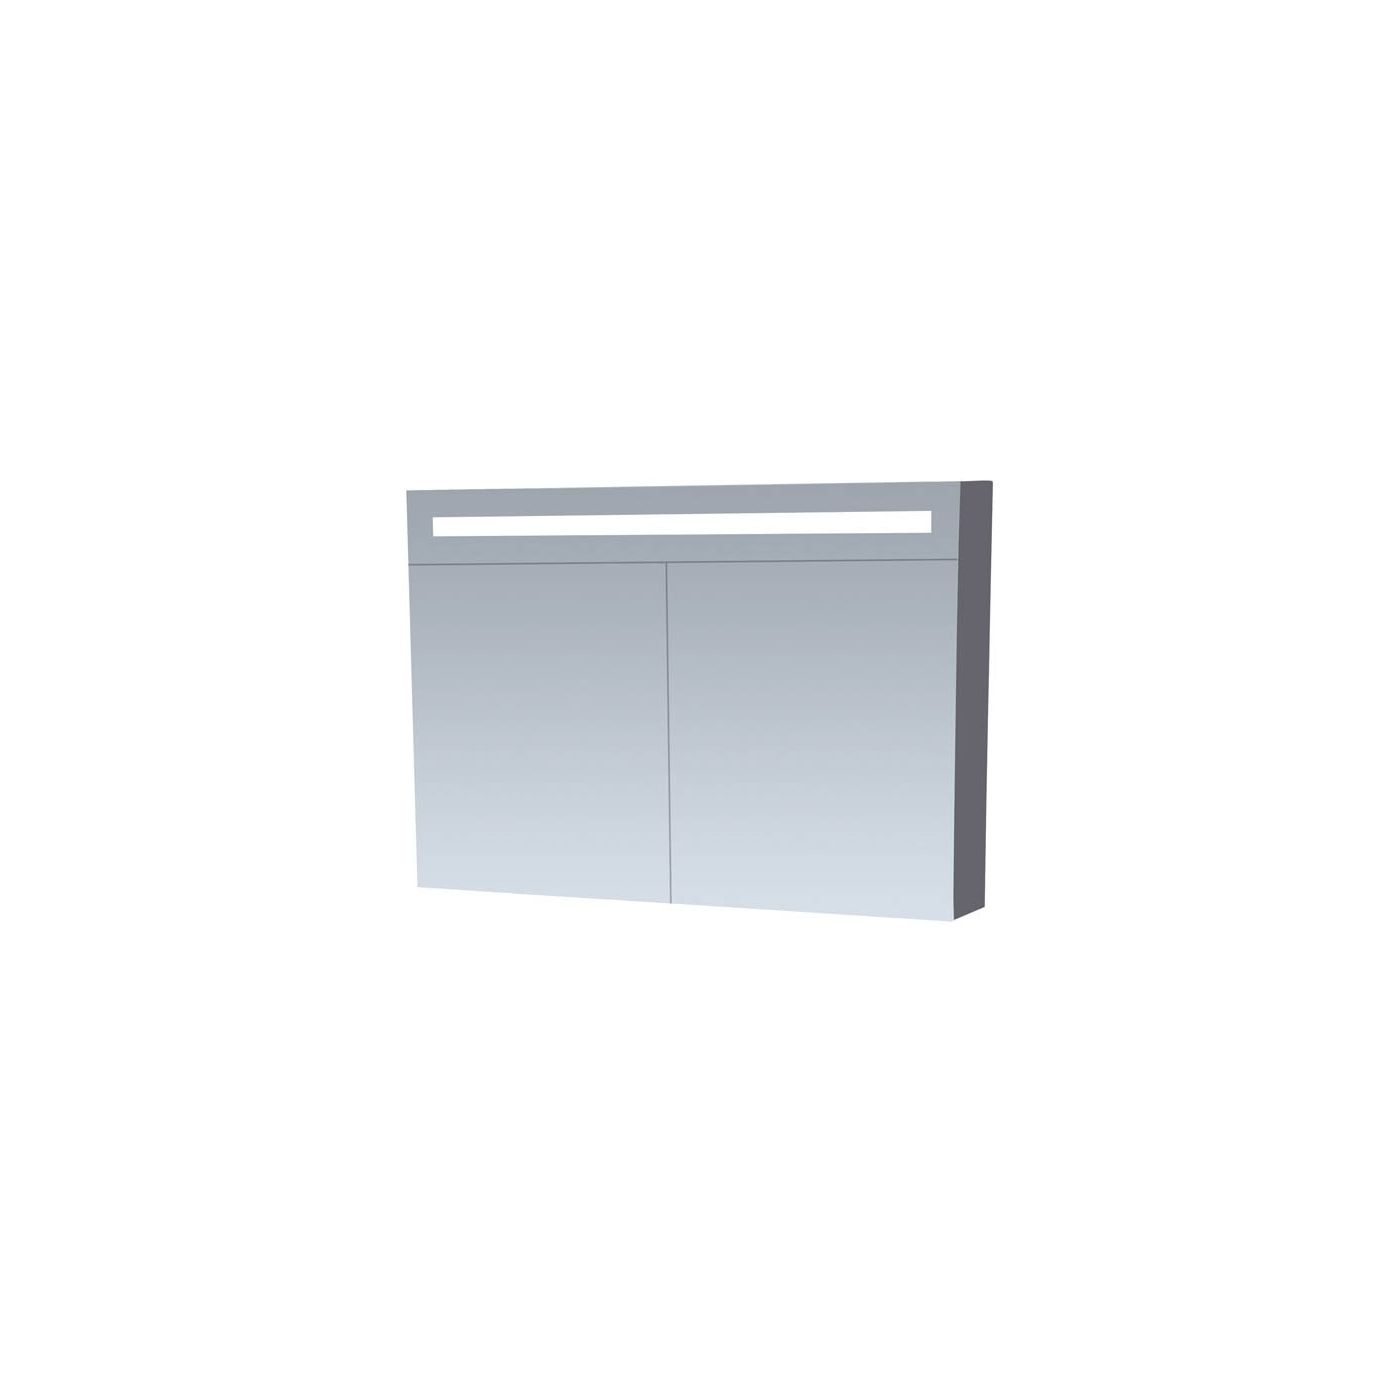 Tapo New Future spiegelkast Grijs 100cm dubbelzijdige spiegels, verlichting, & stopcontact